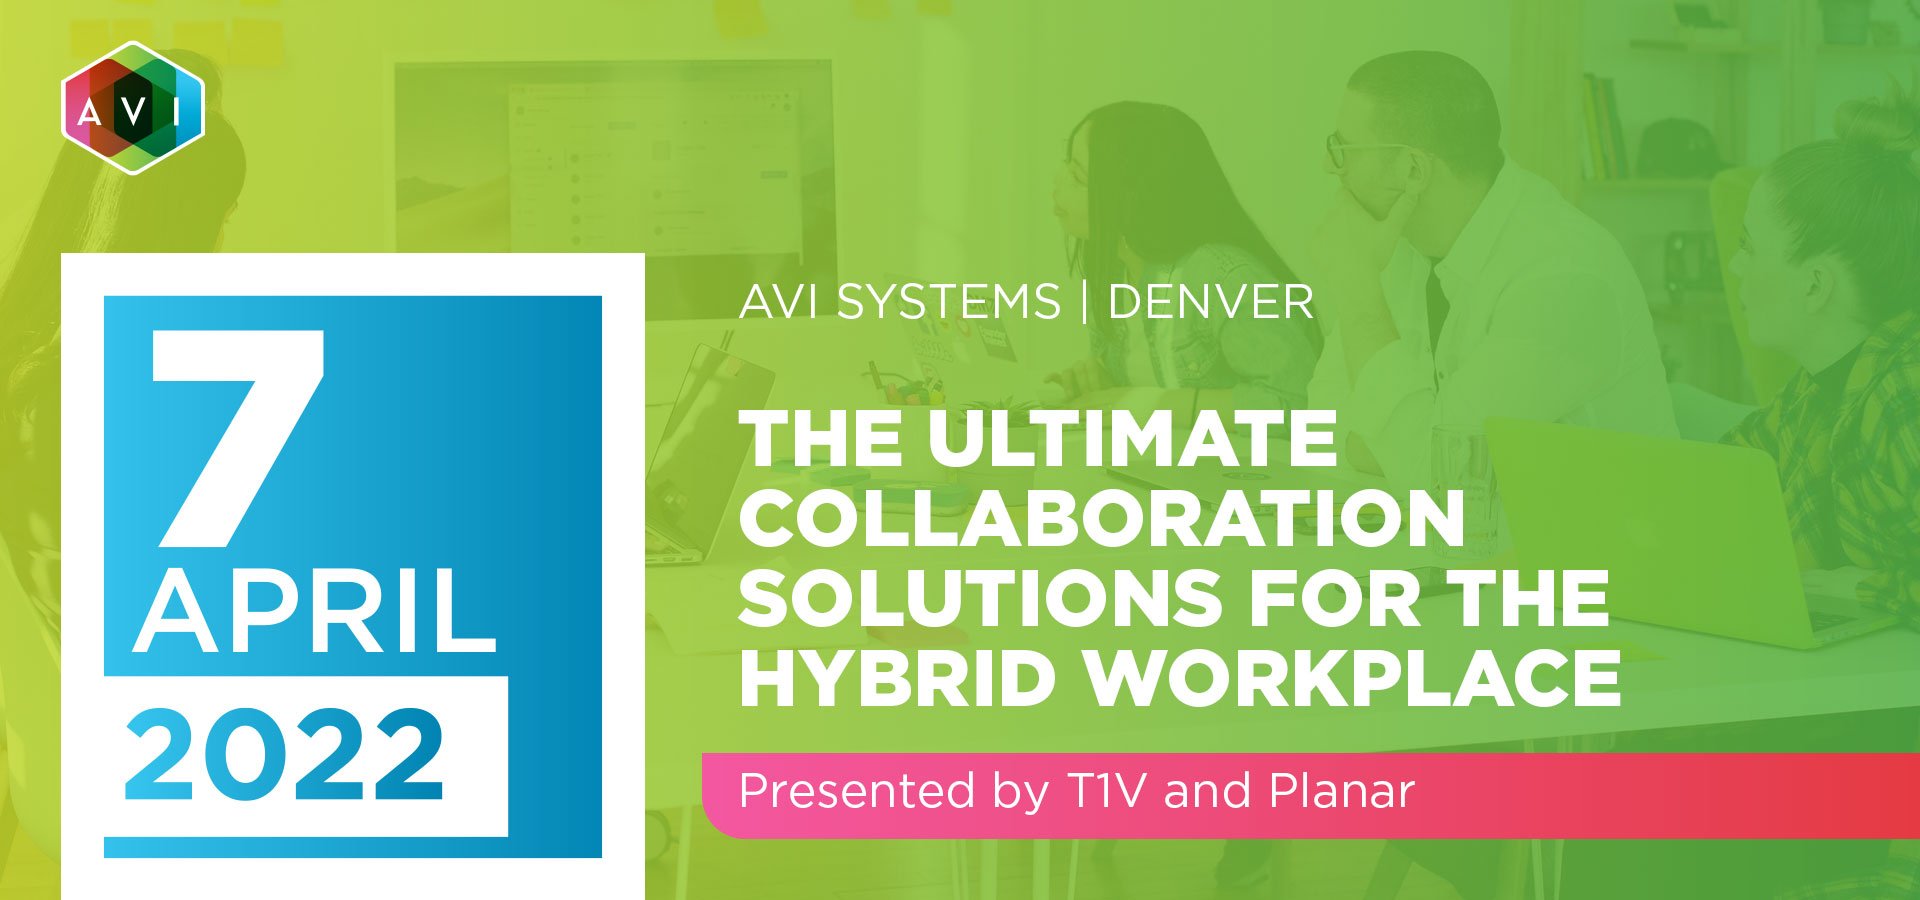 AVI T1V and Planar - Hybrid Work Solutions